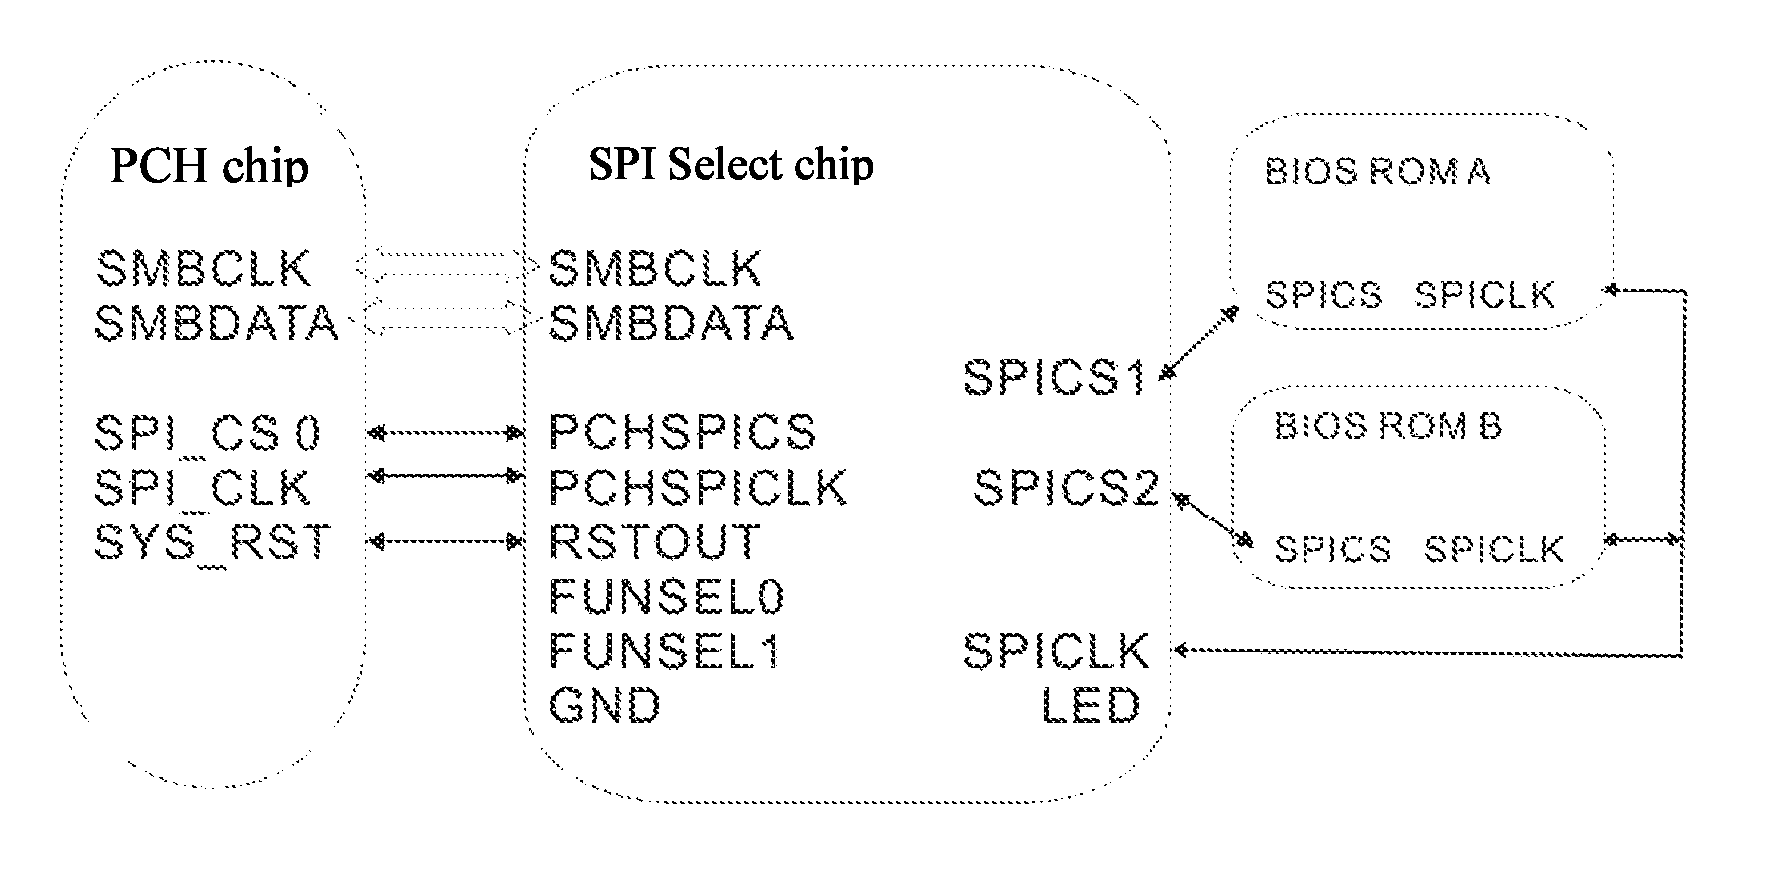 Multi-BIOS circuit and switching method between multiple BIOS chips